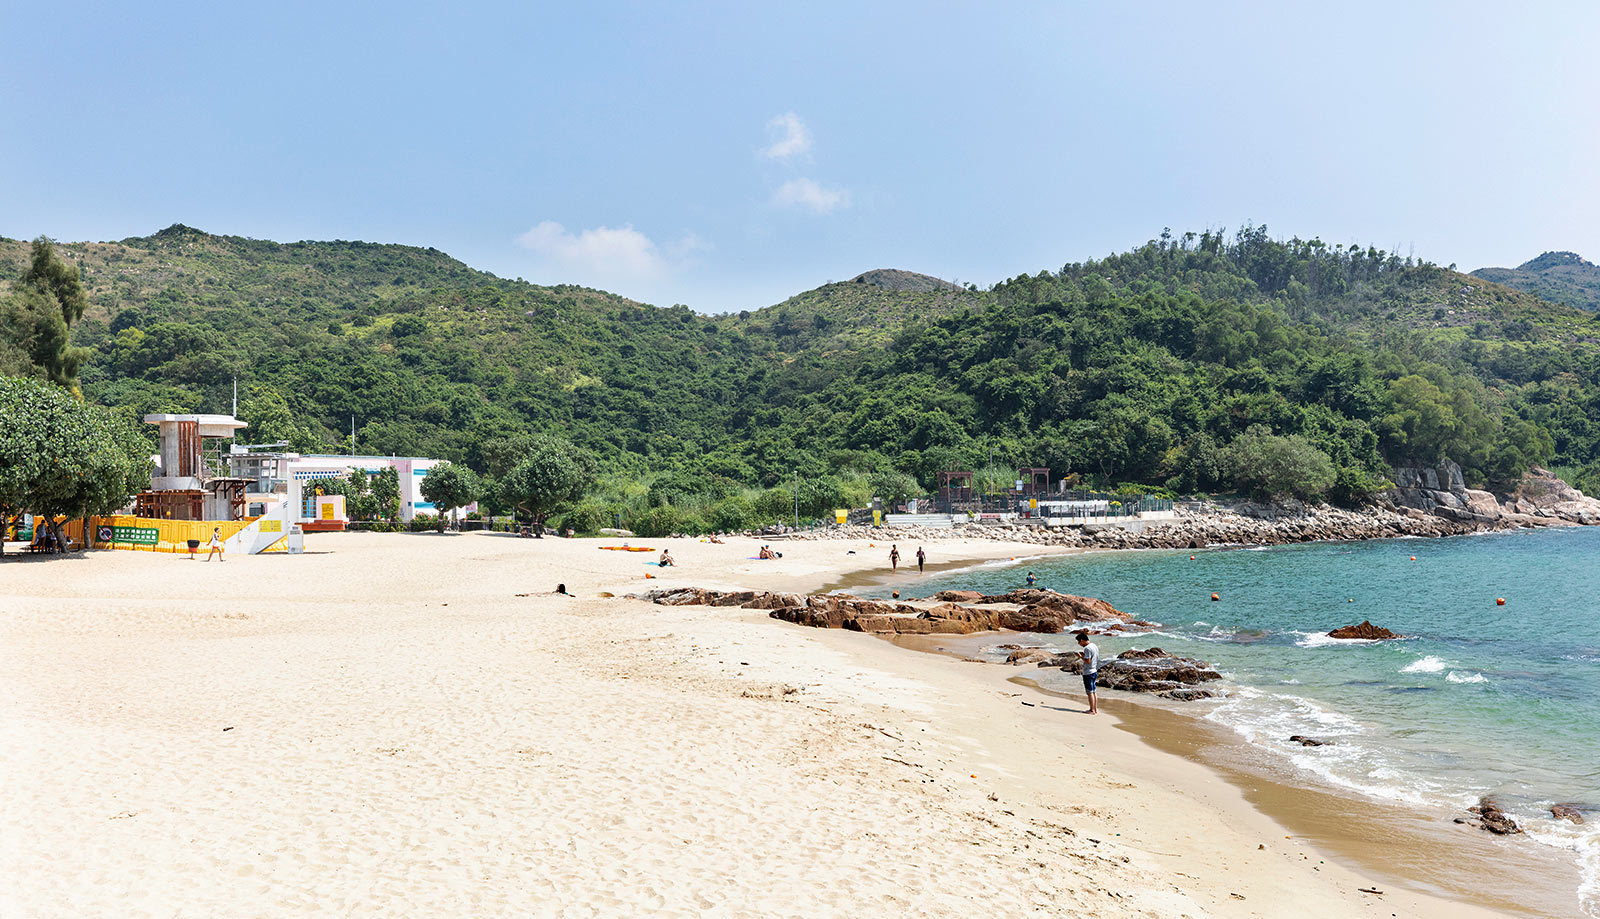 Popular things to do in Lamma Island include visiting Hung Shing Ye Beach